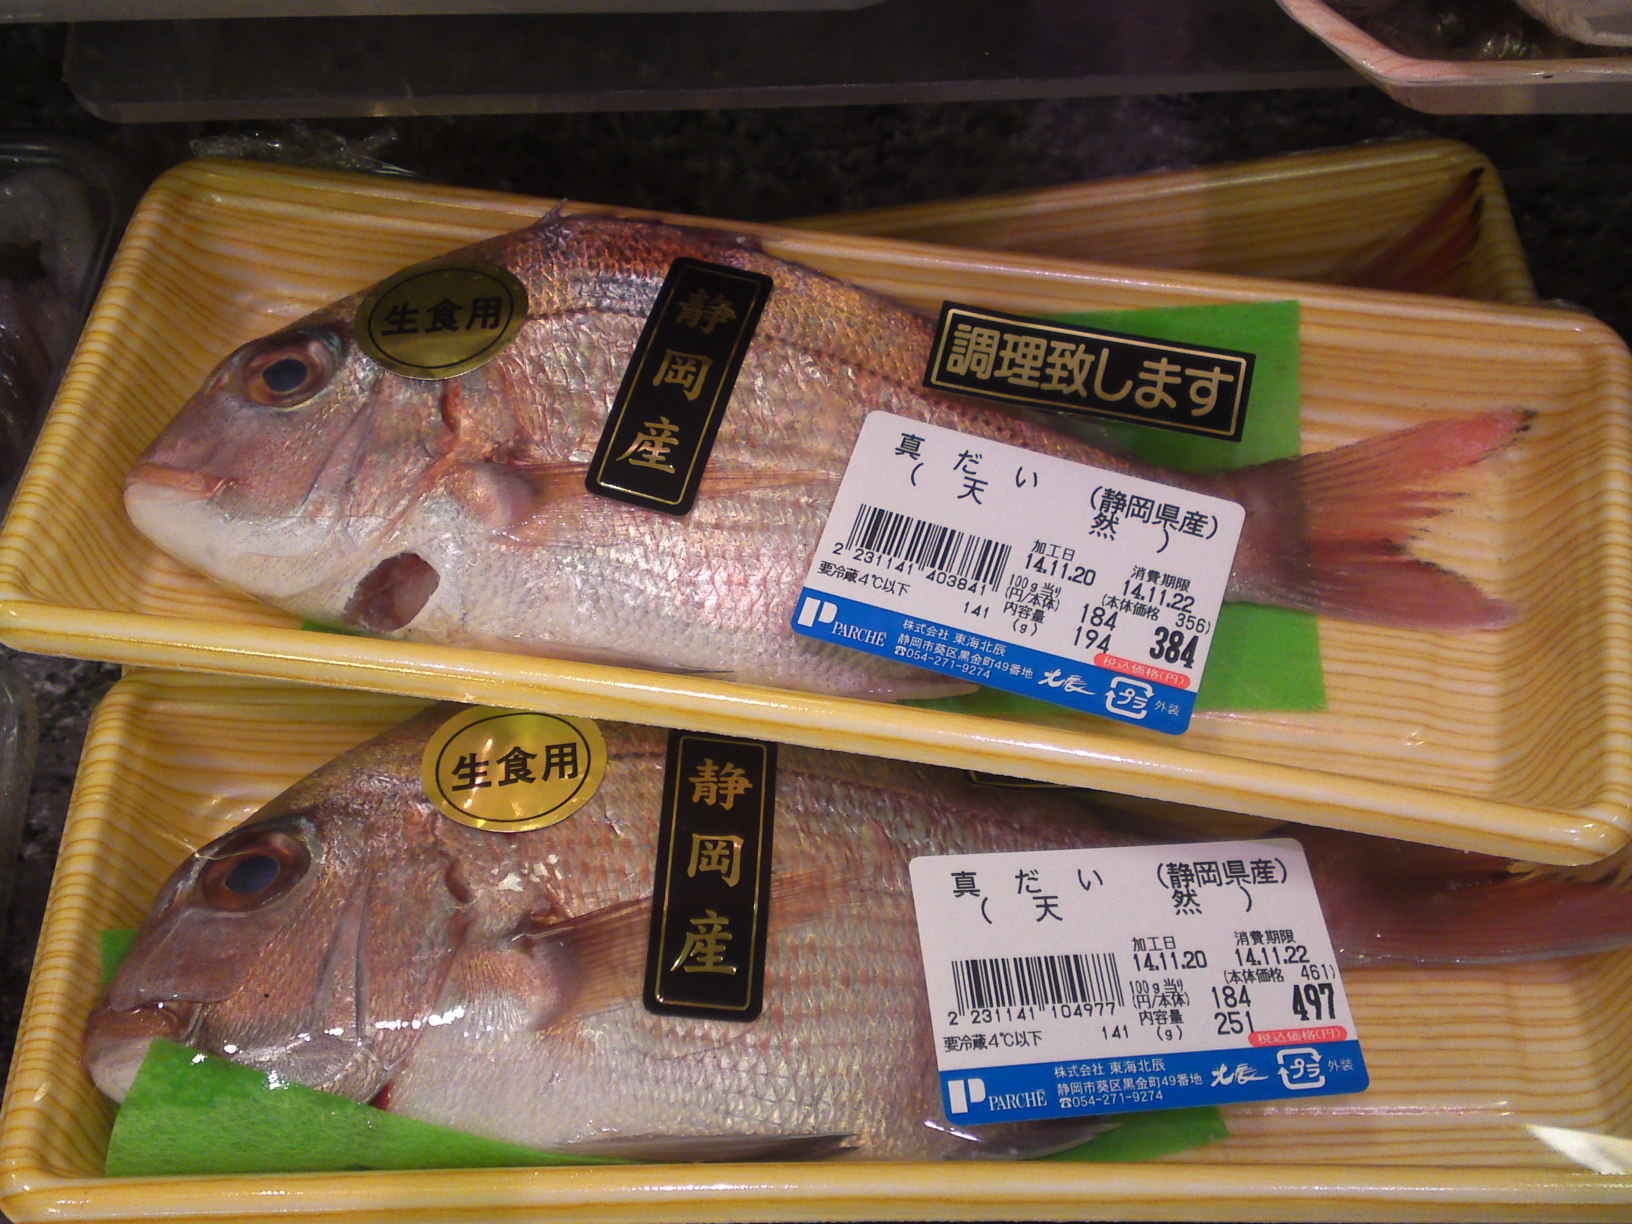 The Japanese English Fish Lexicon